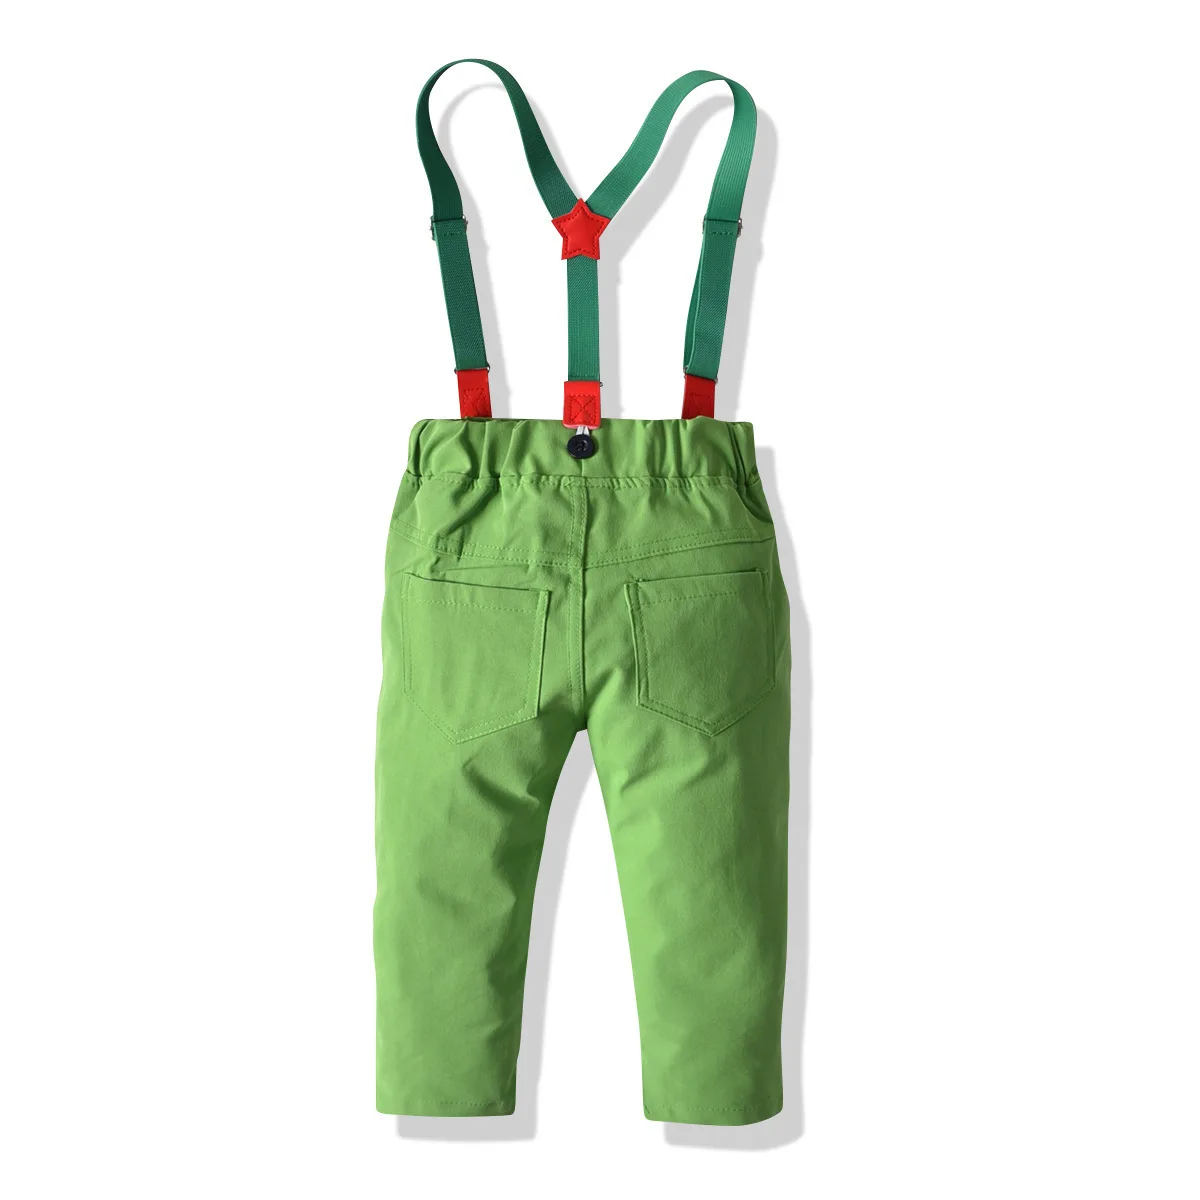 2020 Božič fant oblačila sklop / Belo bluzo z bowtie + Rdeča Jopica+Zelena suspender